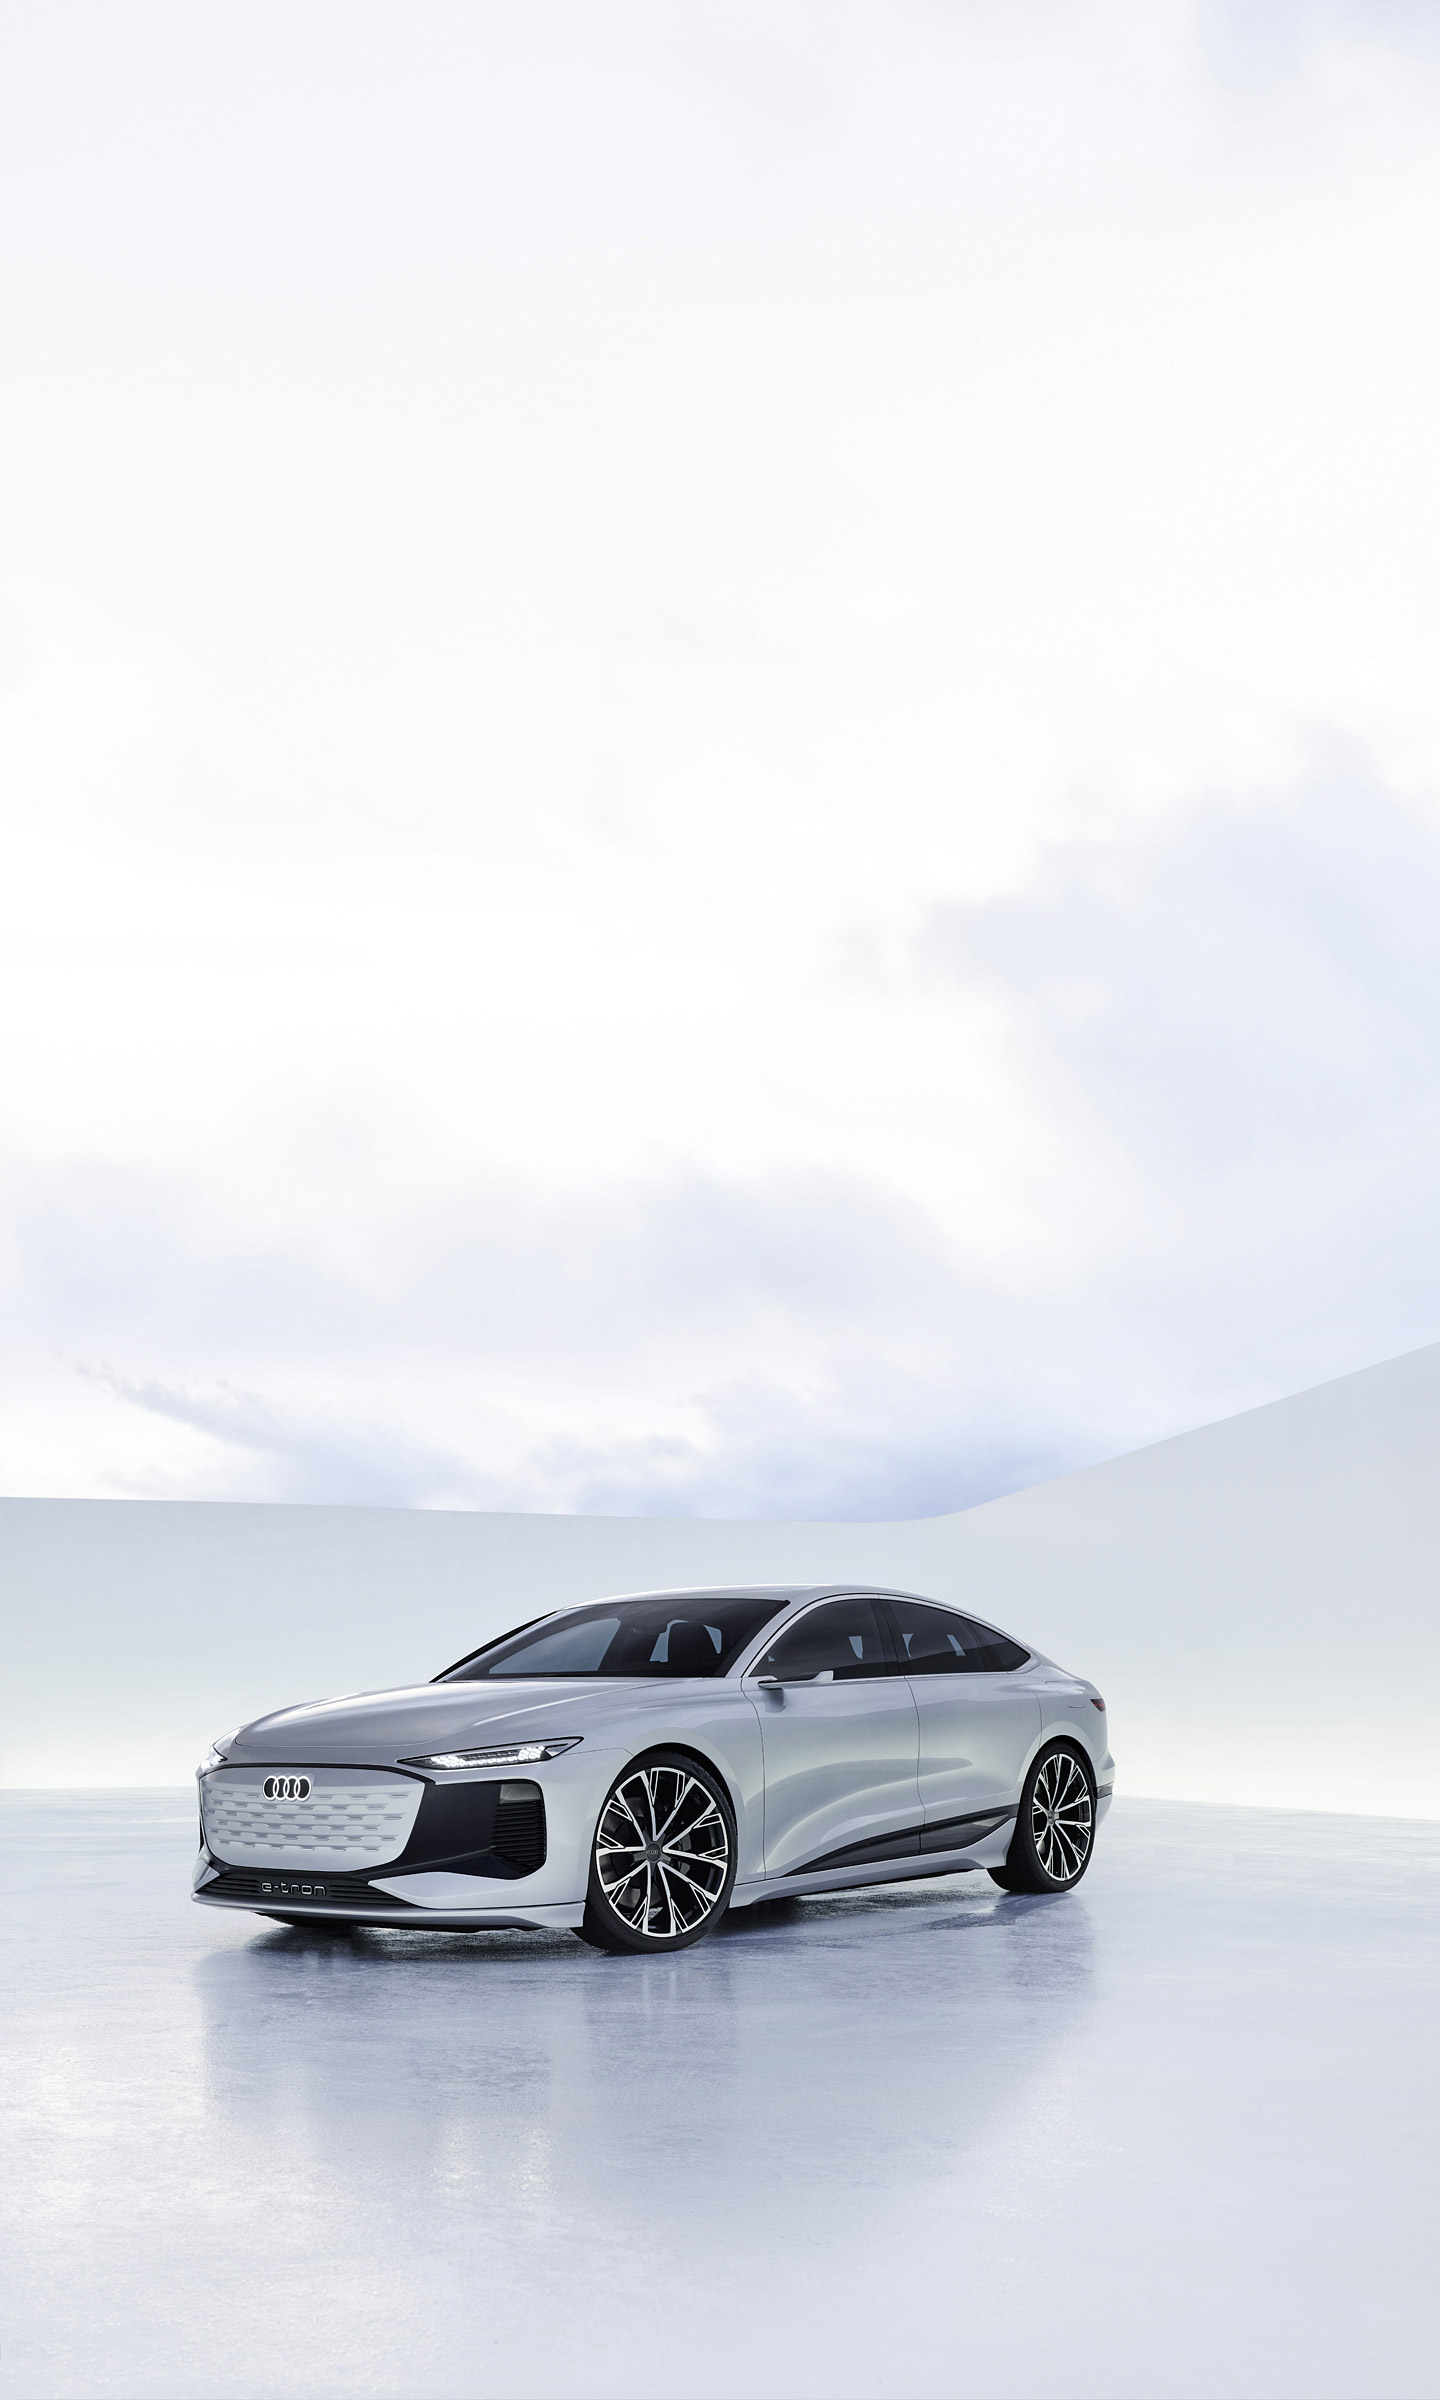  2021 Audi A6 E-Tron Concept Wallpaper.